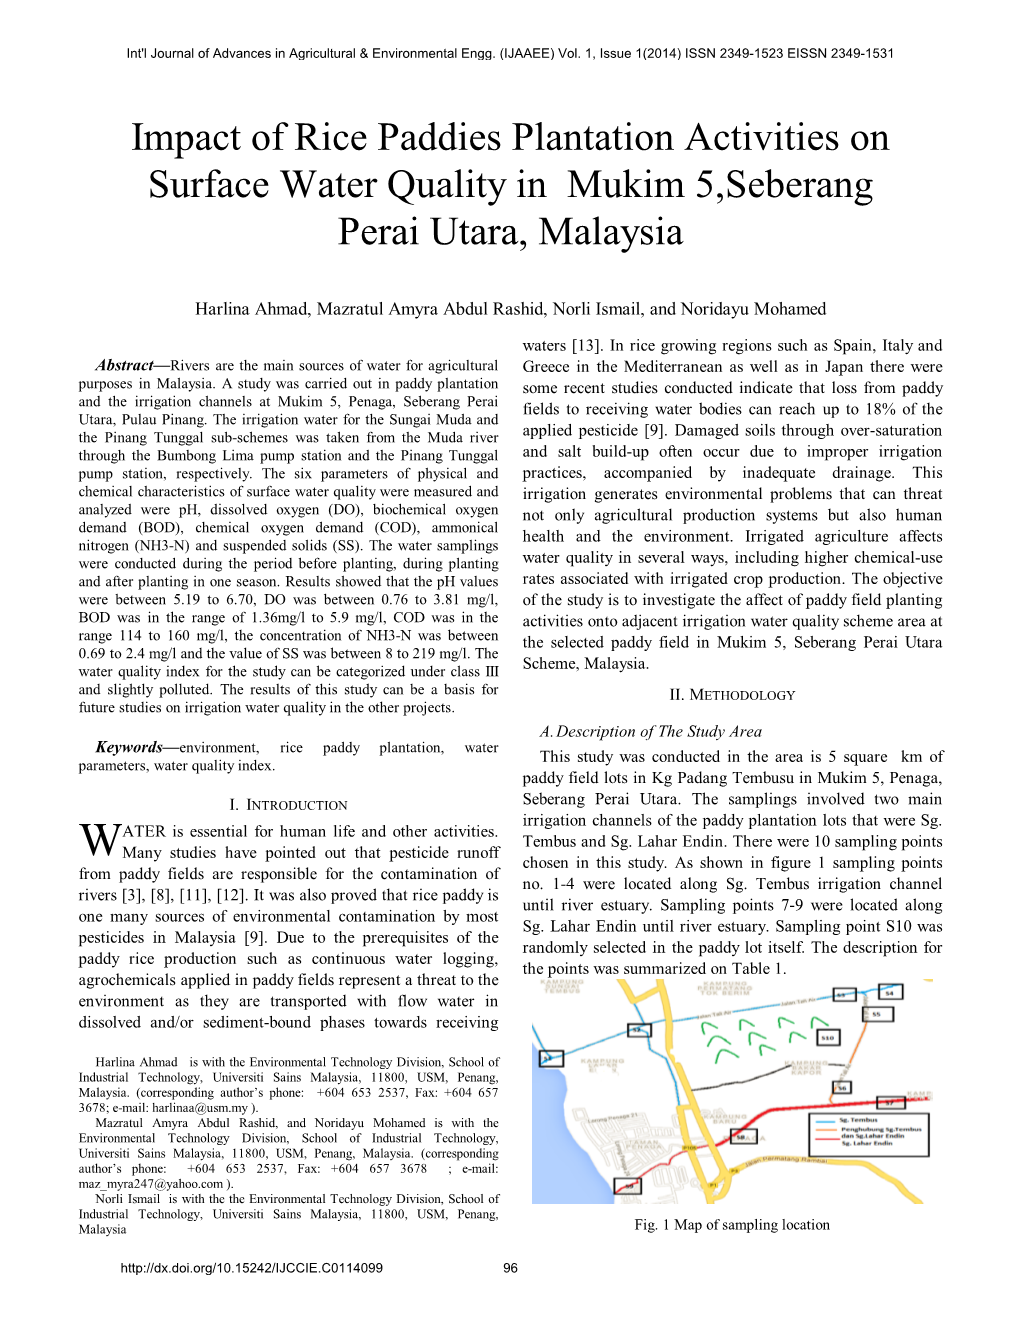 Impact of Rice Paddies Plantation Activities on Surface Water Quality in Mukim 5,Seberang Perai Utara, Malaysia